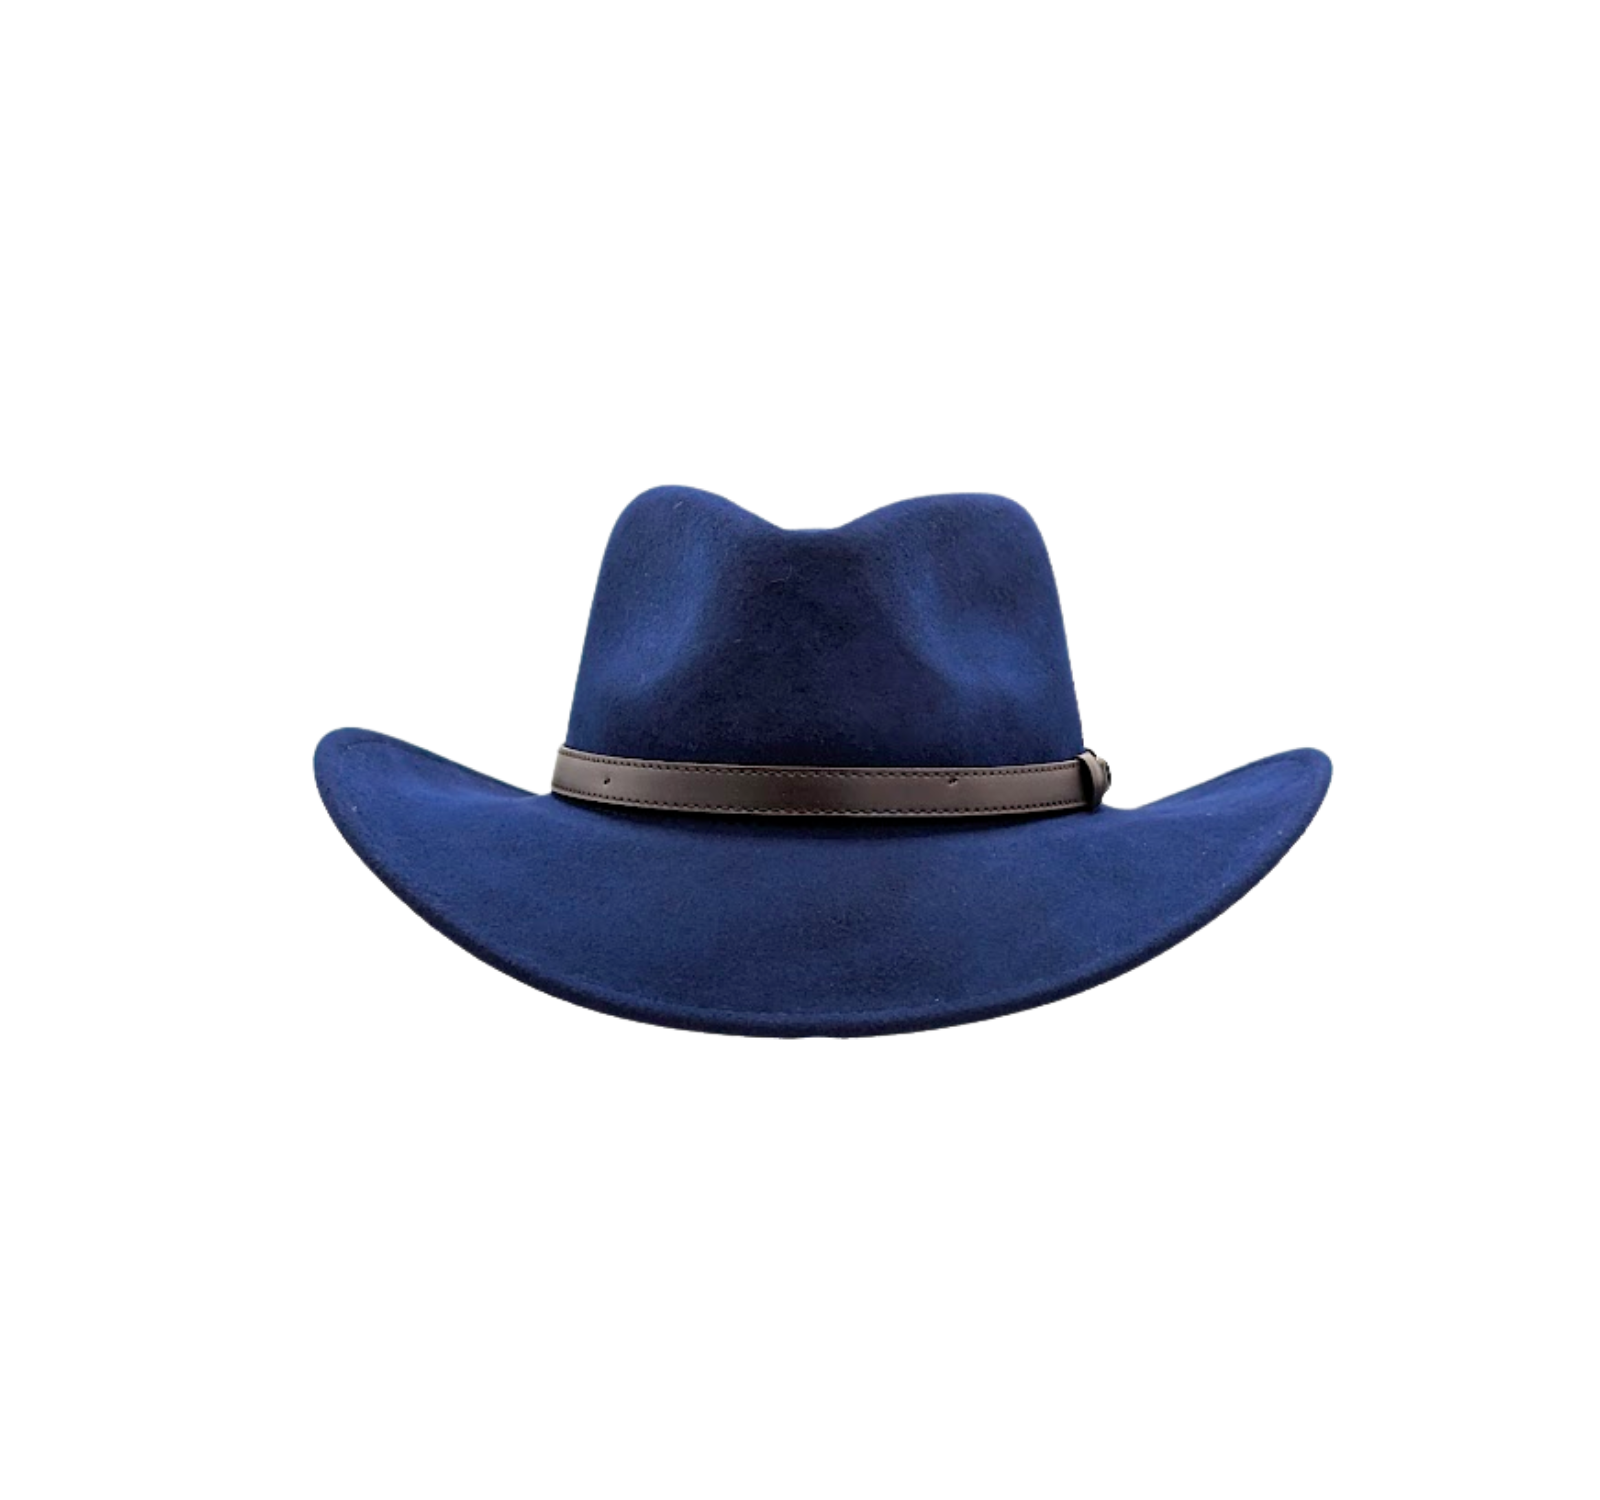 Stansmore Brown Cowboy Hat